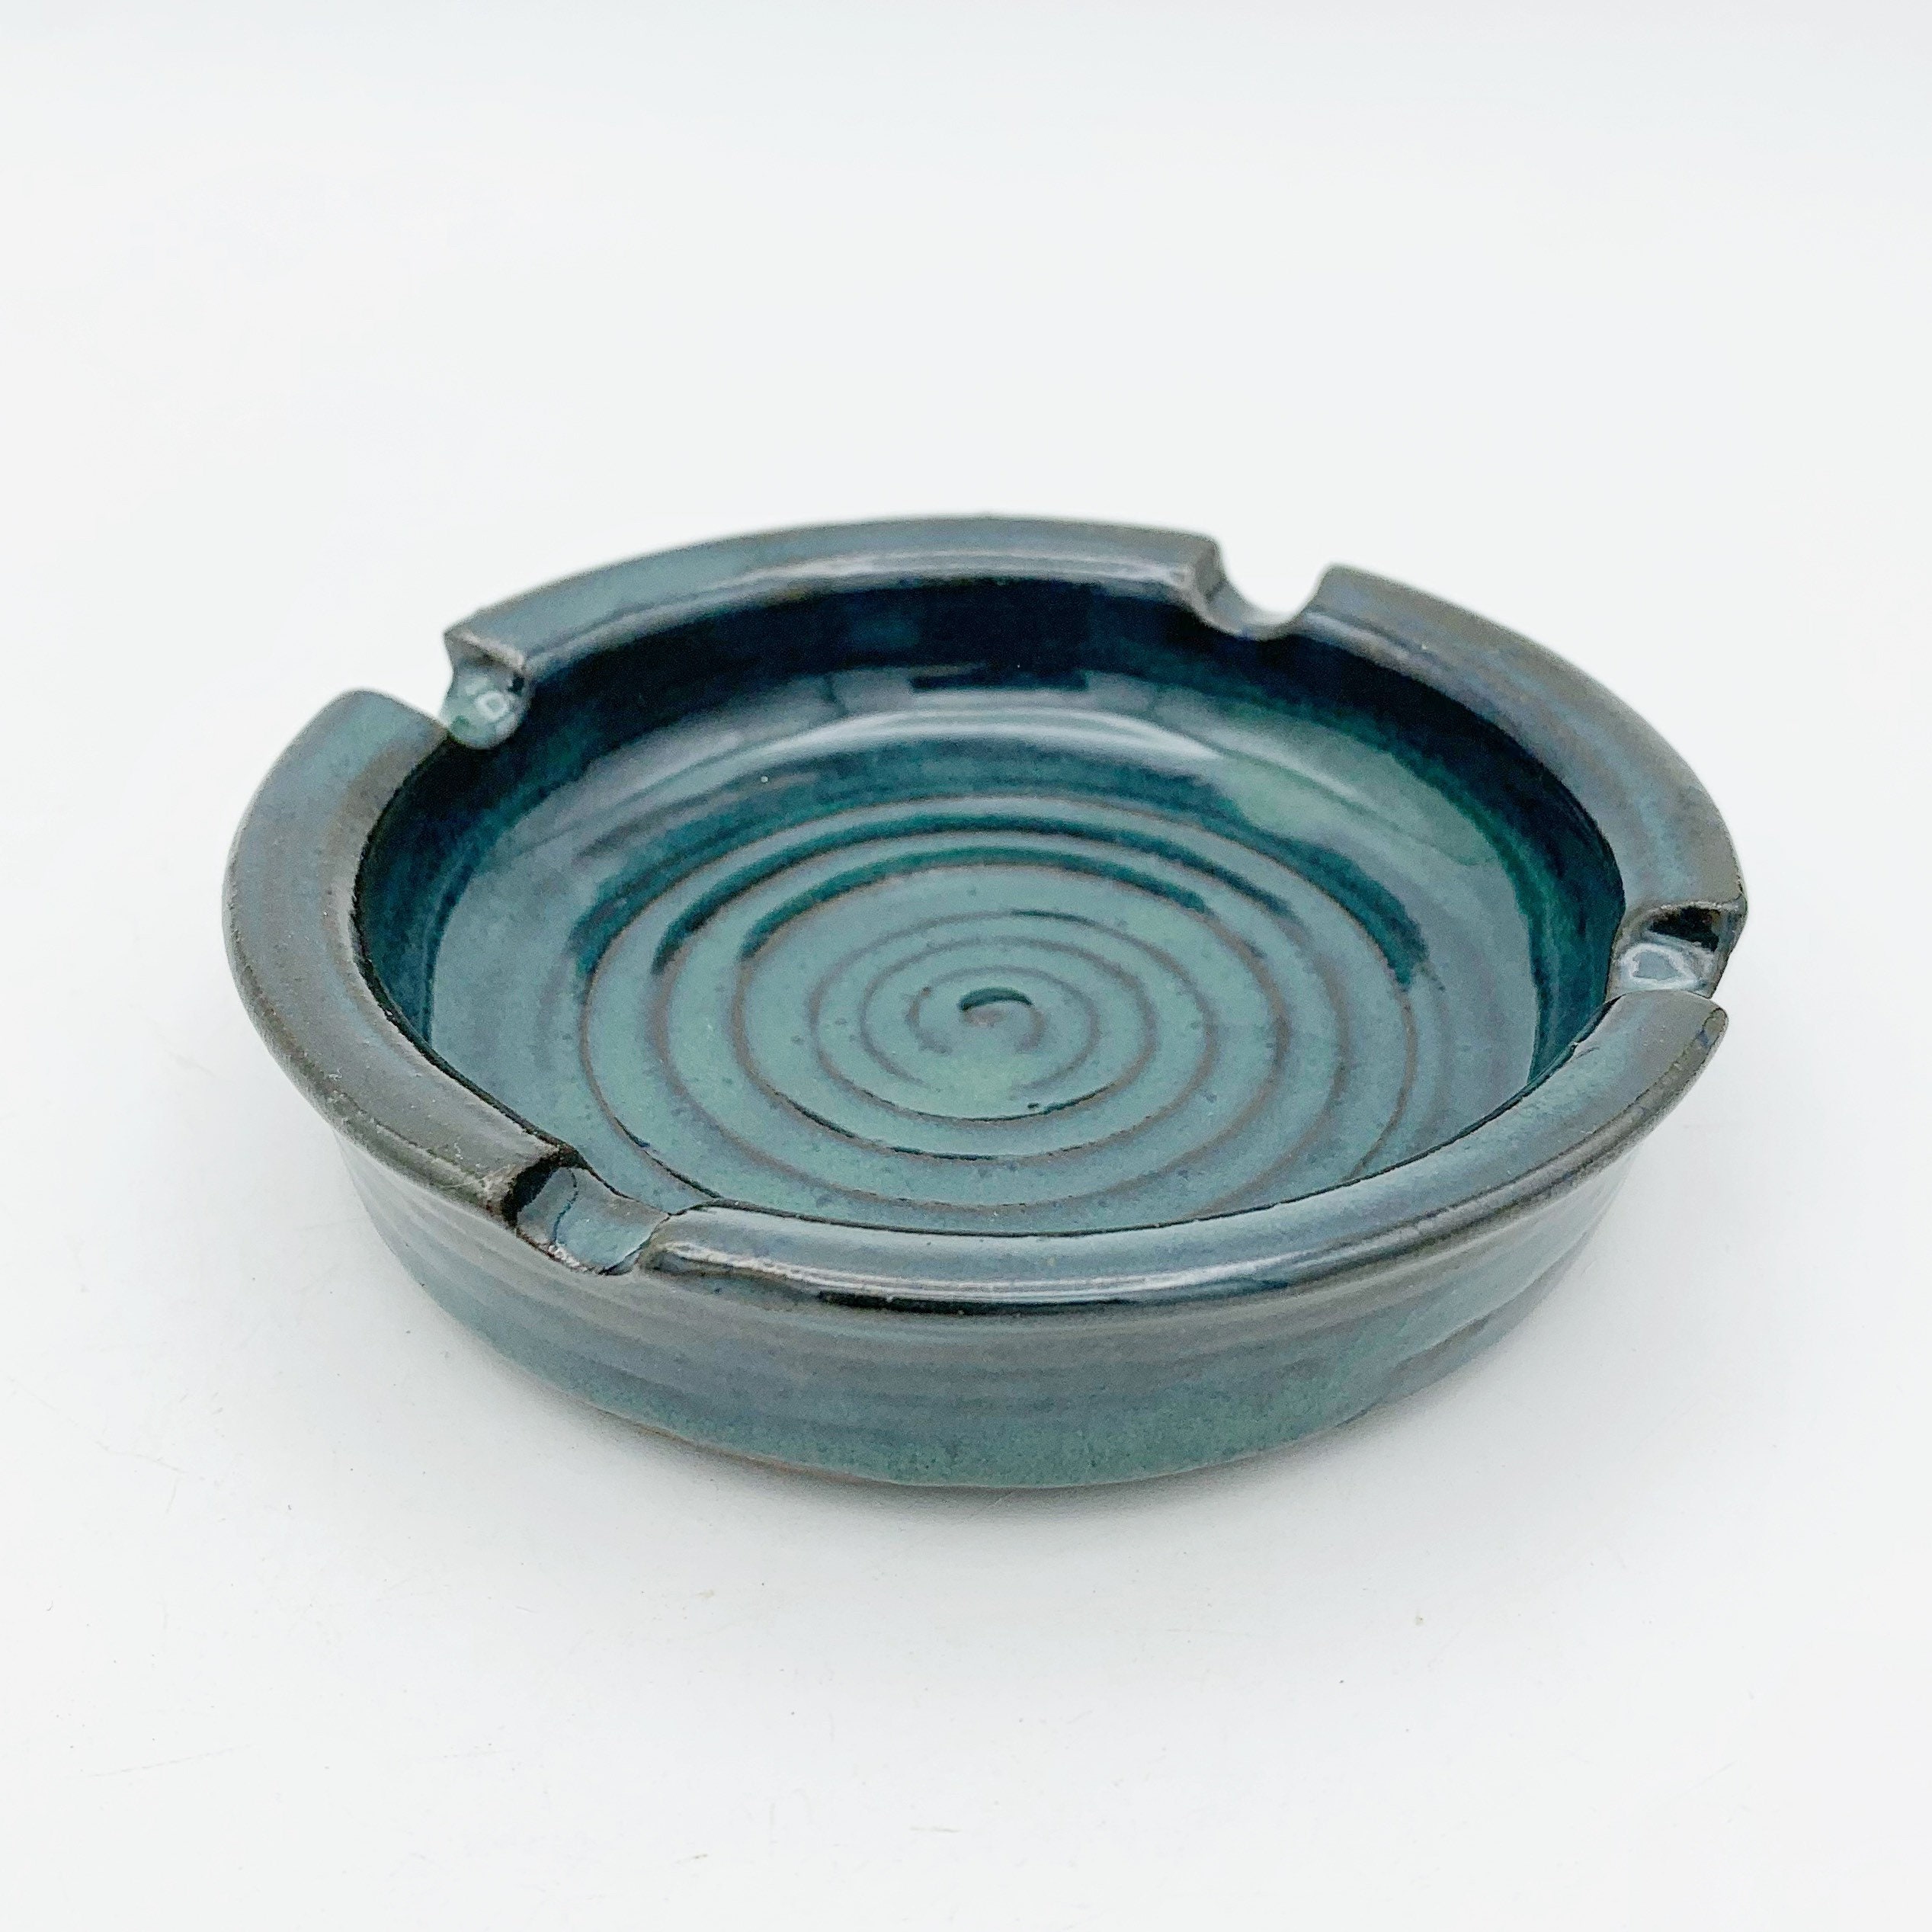 Aschenbecher aus Keramik 3-fach, Bunt (B/H/T) 11x6x11cm